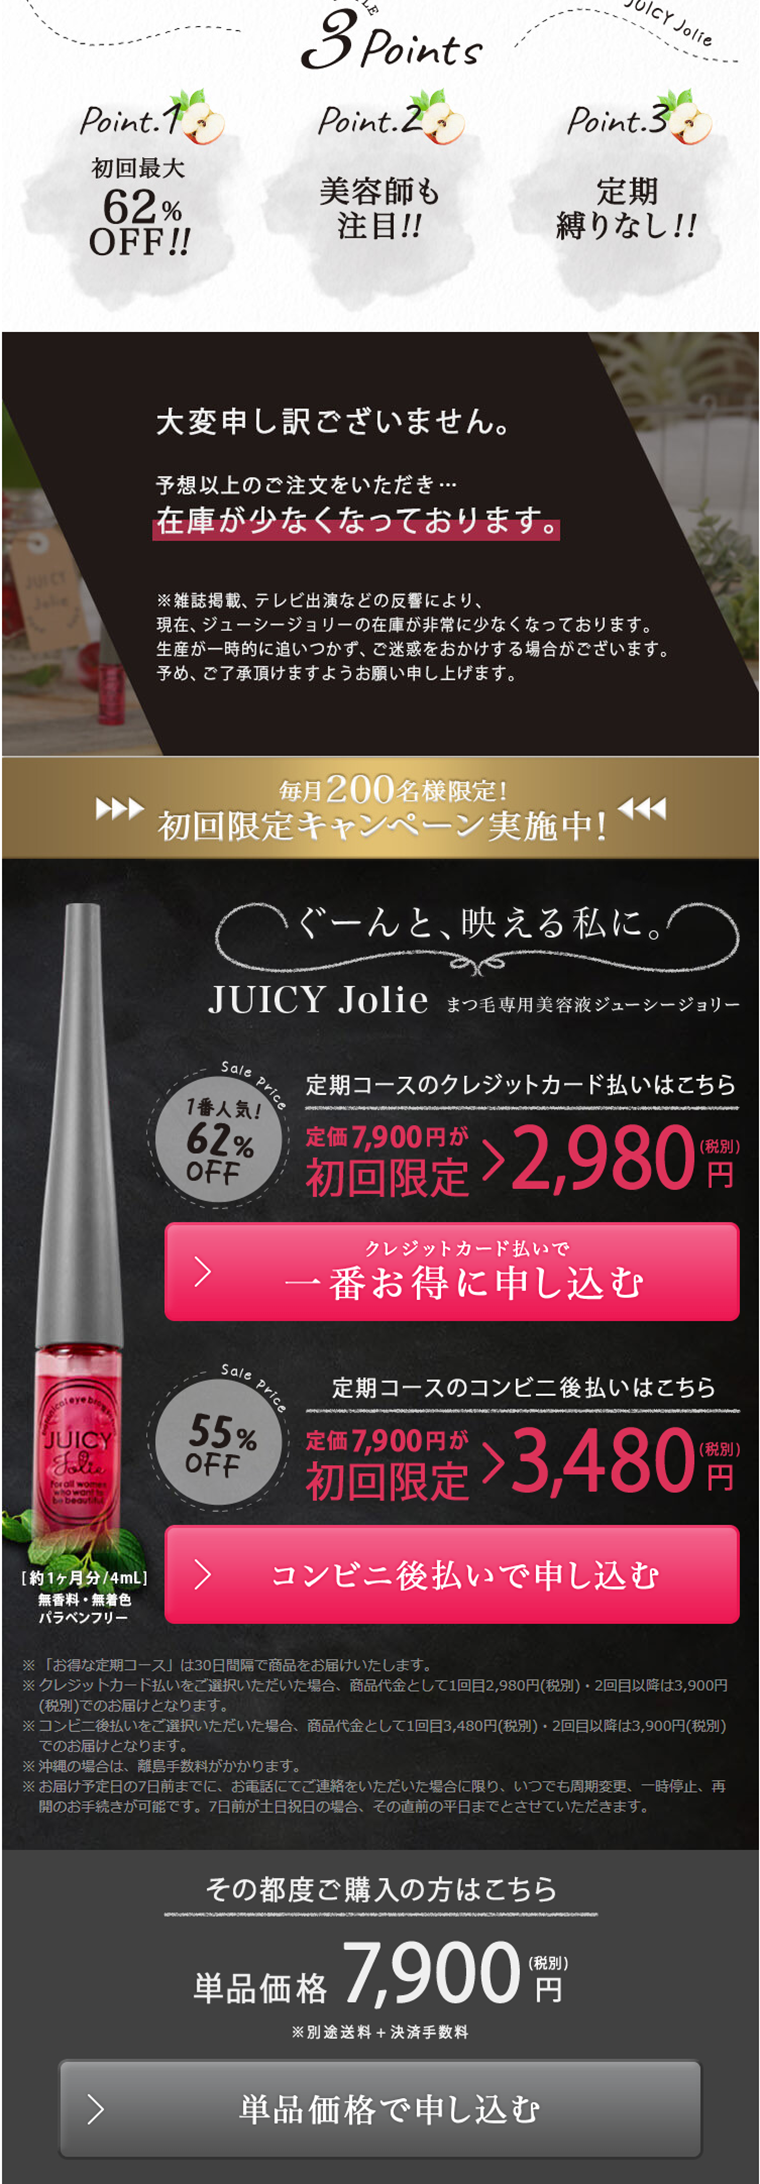 JUICY Jolie_pc_2